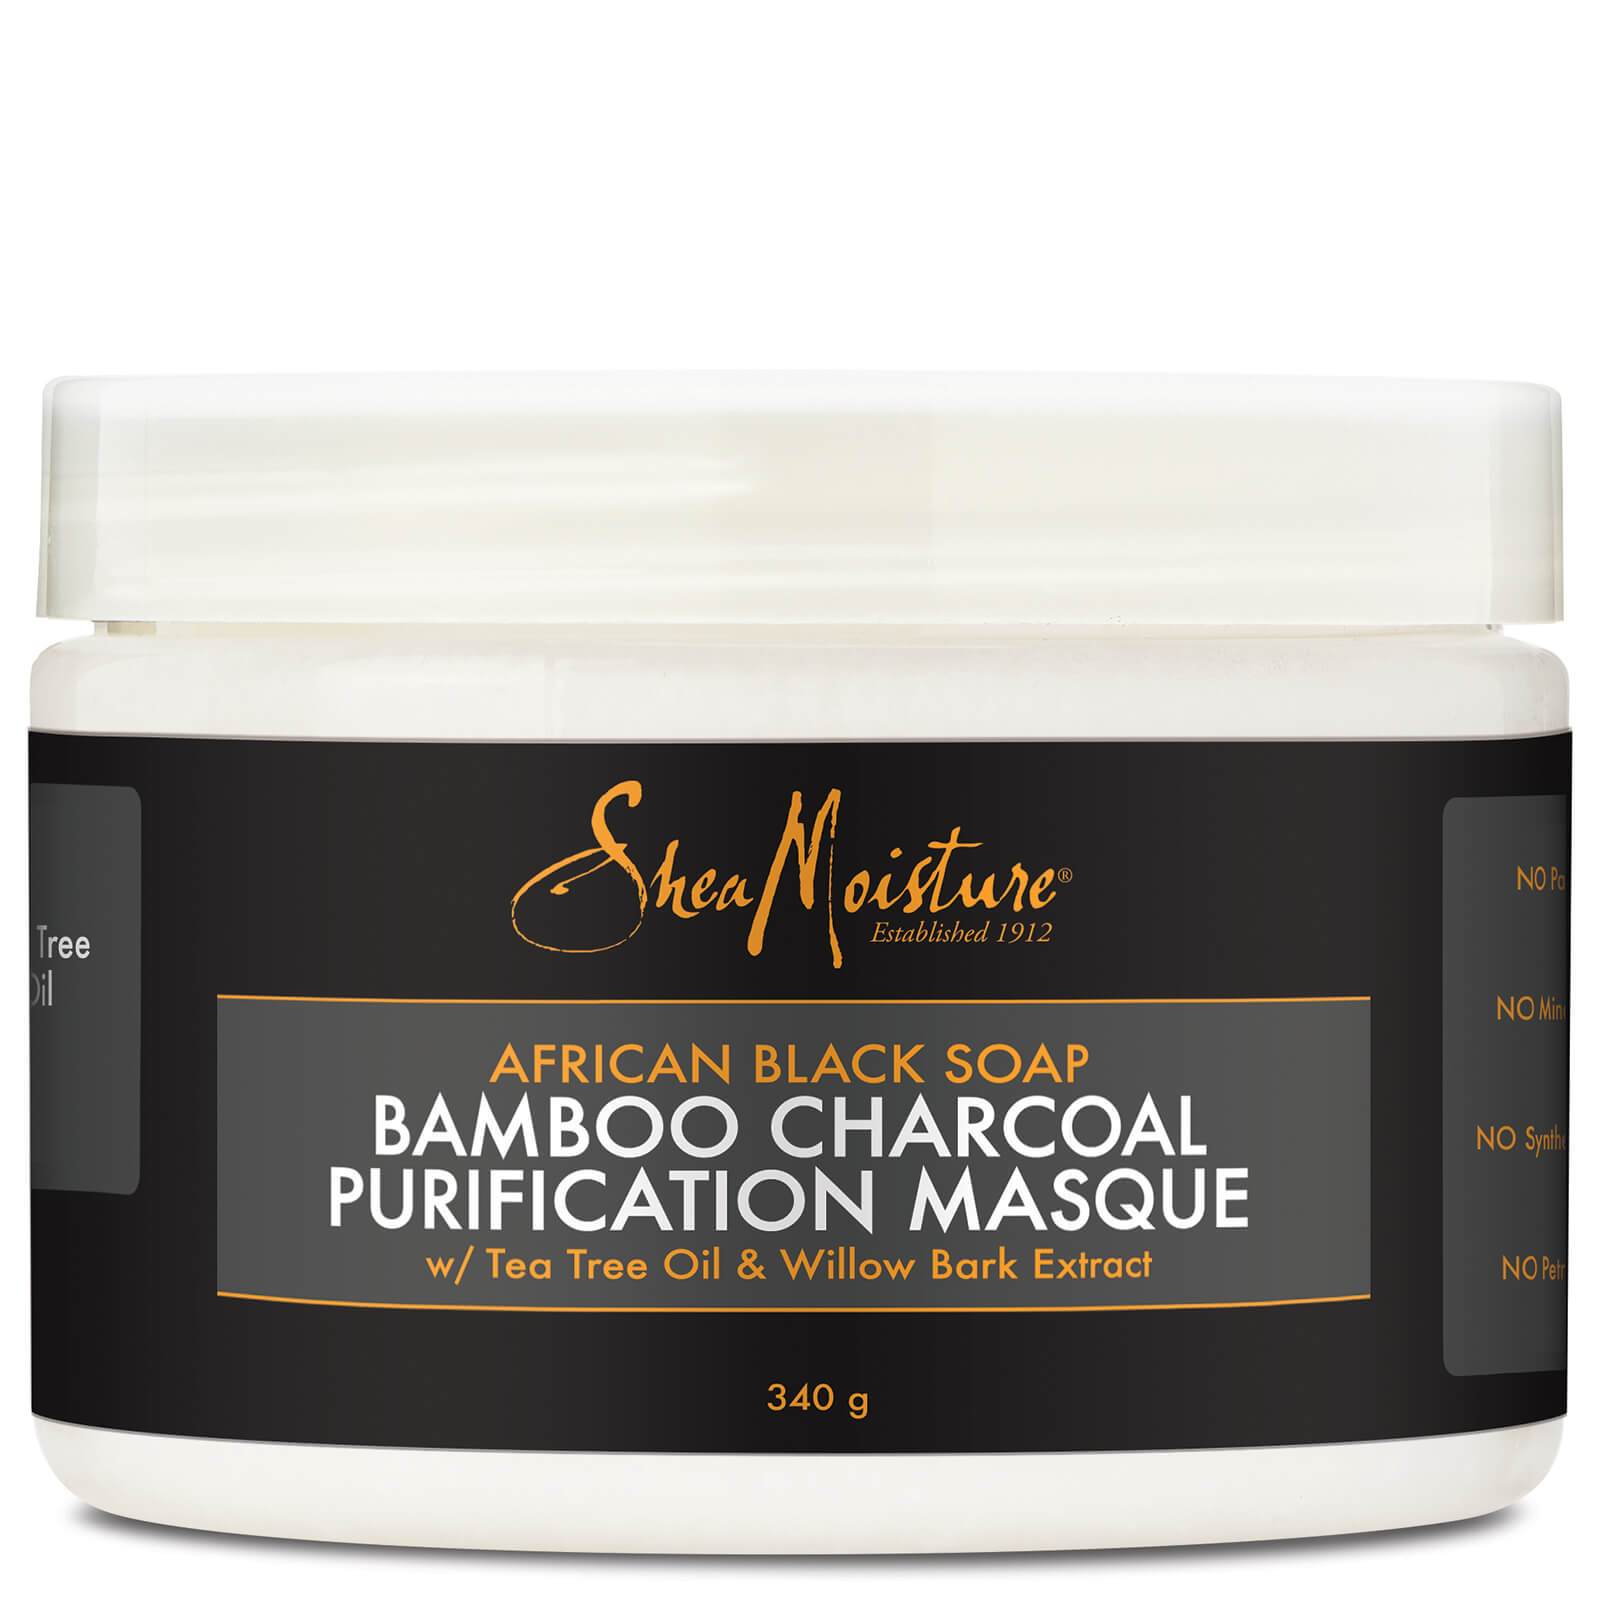 Shea Moisture - Masque purifiant au bambou/charbon/savon noir africain - 340g - Shea Moisture - Ethni Beauty Market